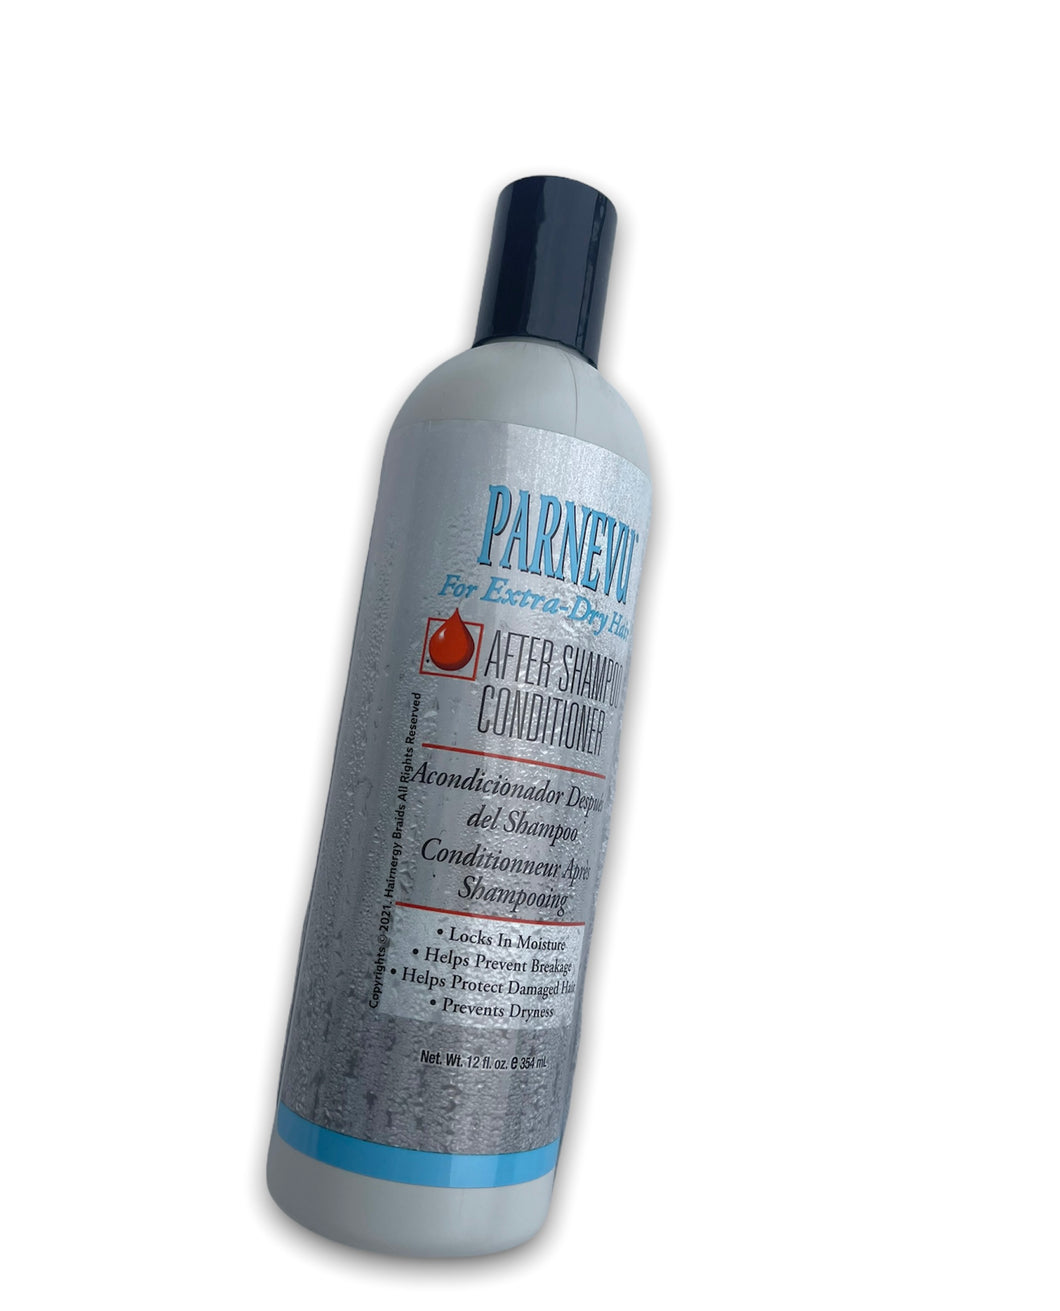 Parnevu for Extra Dry Hair After Shampoo Conditioner 12oz